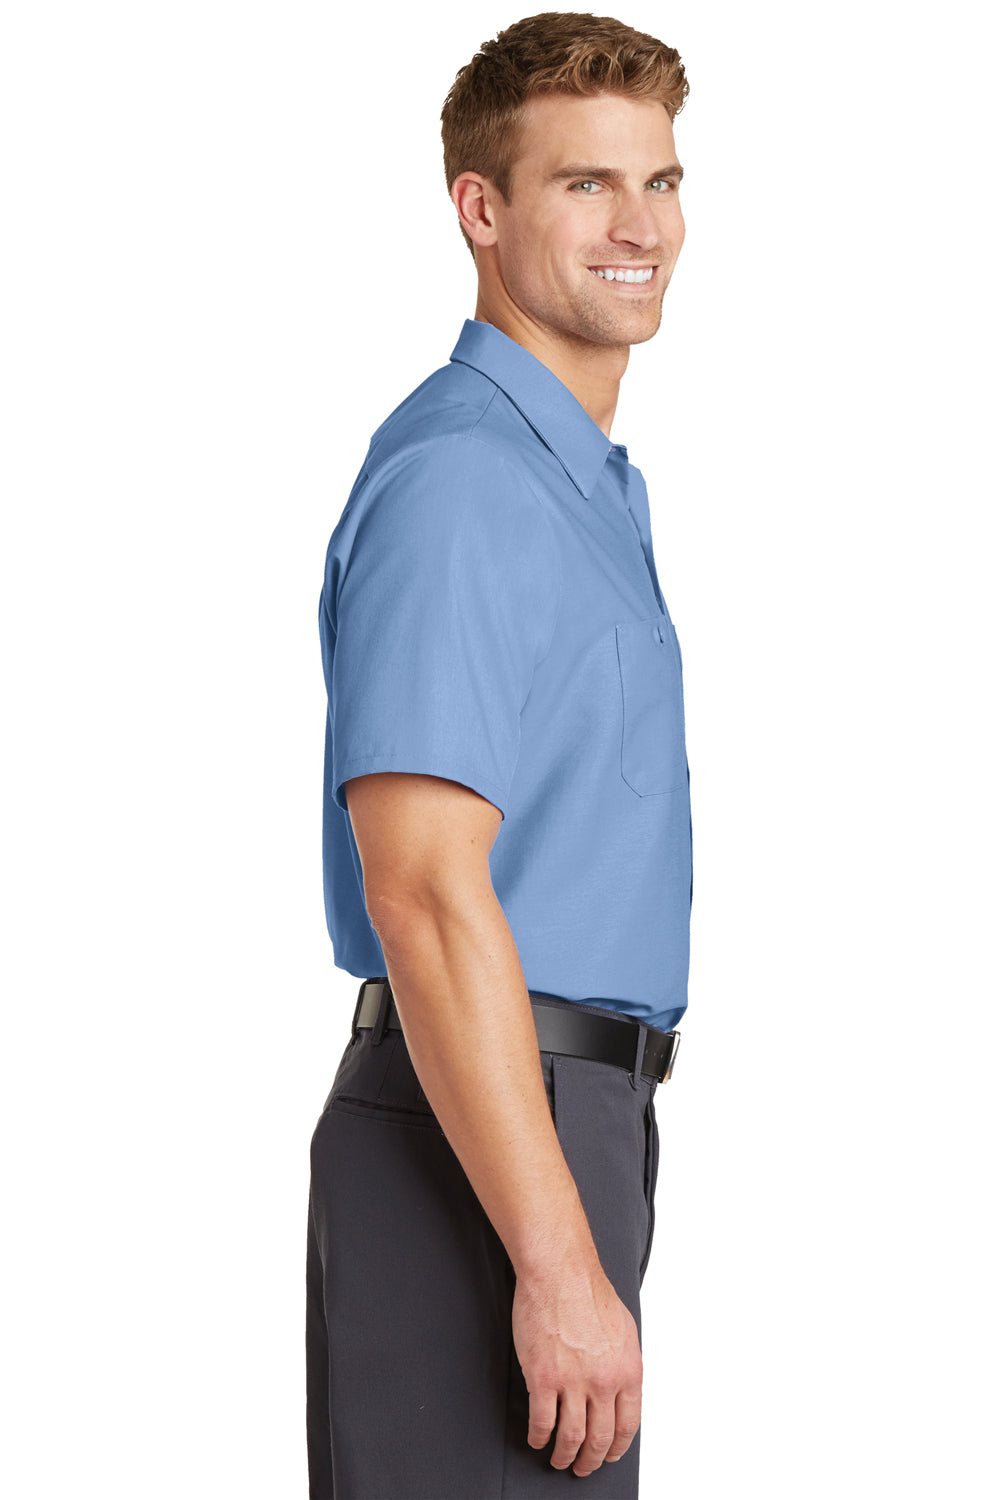 Red Kap SP24 Mens Industrial Moisture Wicking Short Sleeve Button Down Shirt w/ Double Pockets Petrol Blue Side